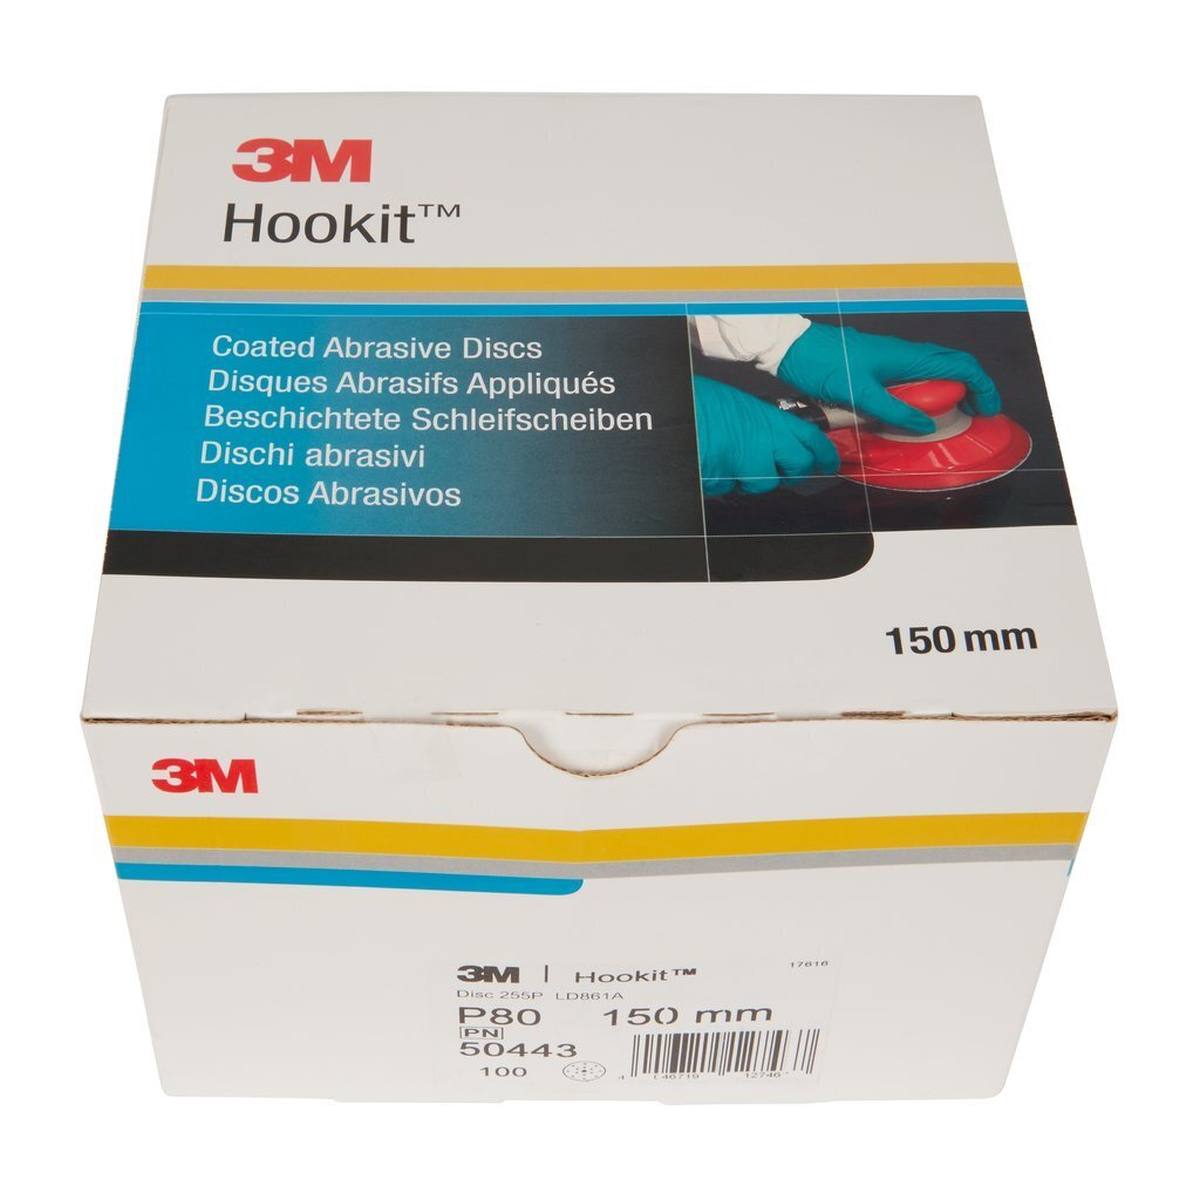 3M Hookit Gold Premium 255P+, 150 mm, P80, 15 trous #50443